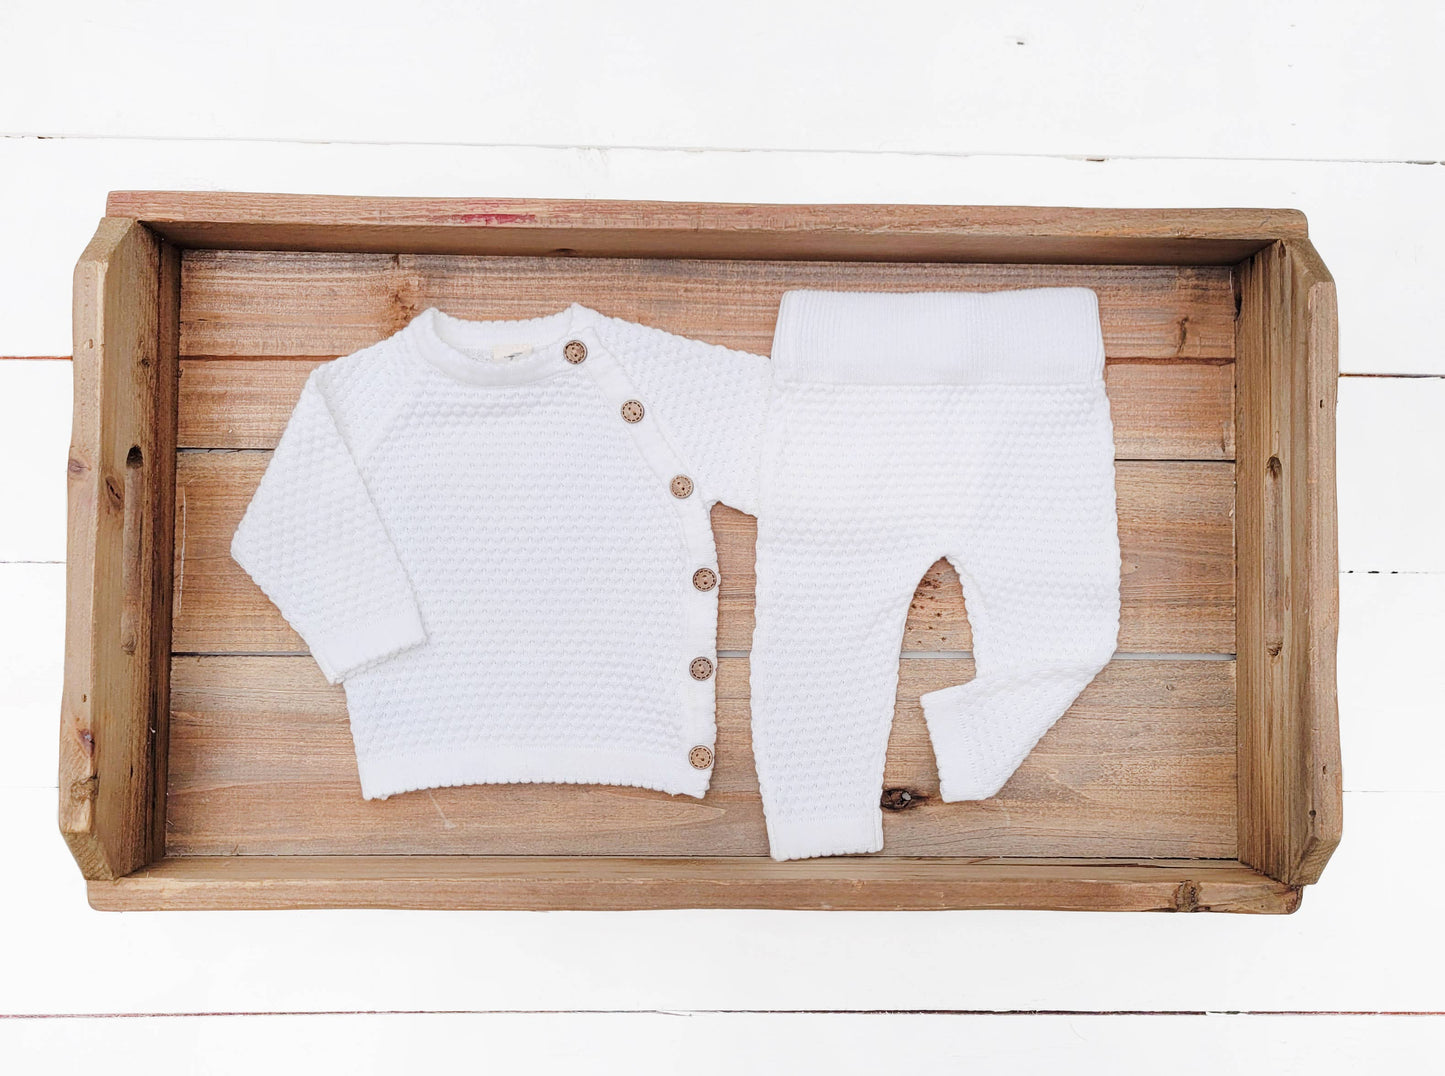 Noah Cotton Knit 2pc Shirt and pants Baby Outfit Set